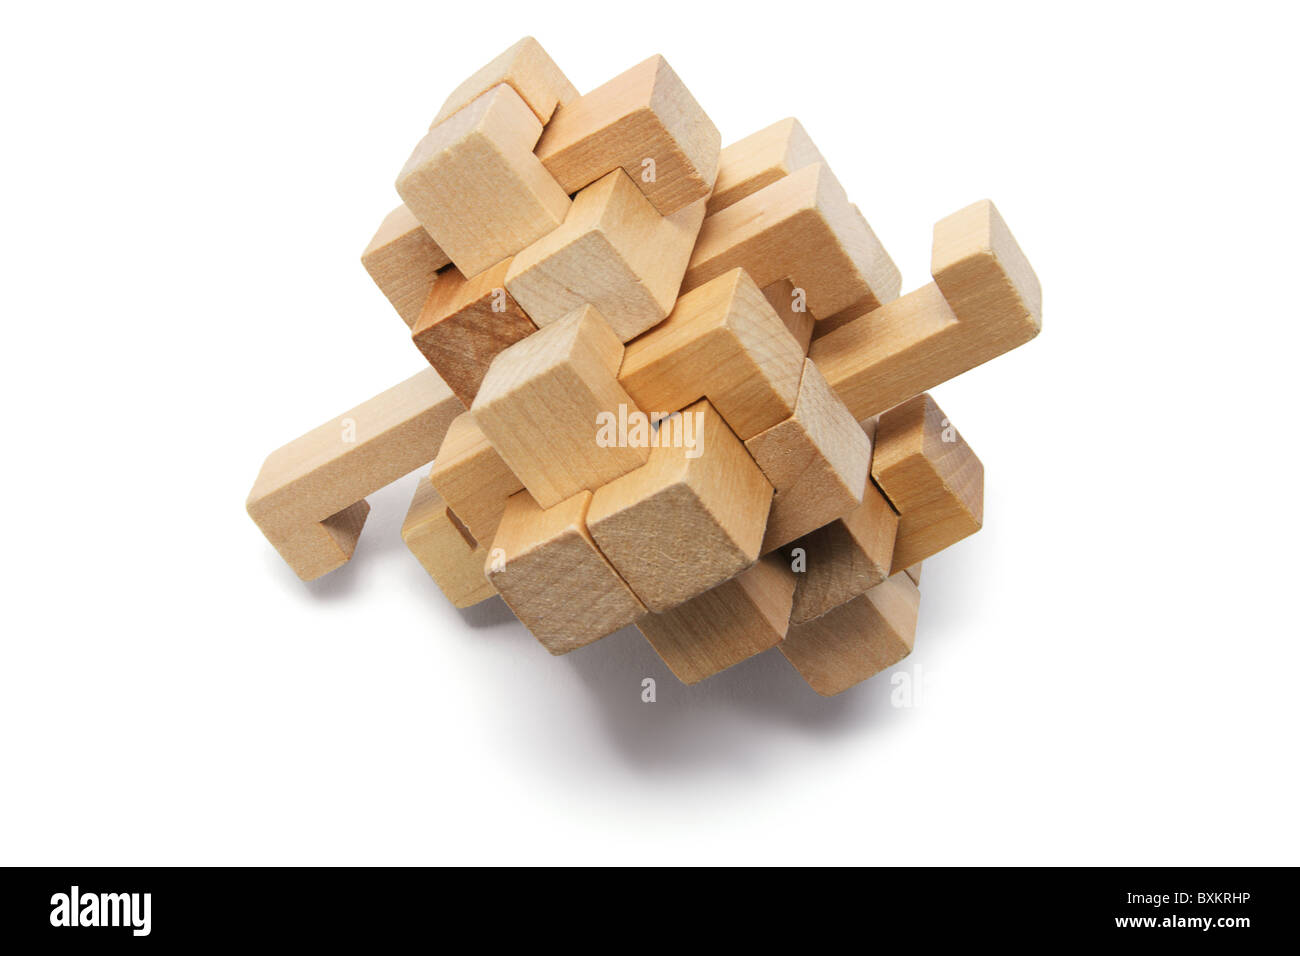 3D Wooden Puzzle Stock Photo